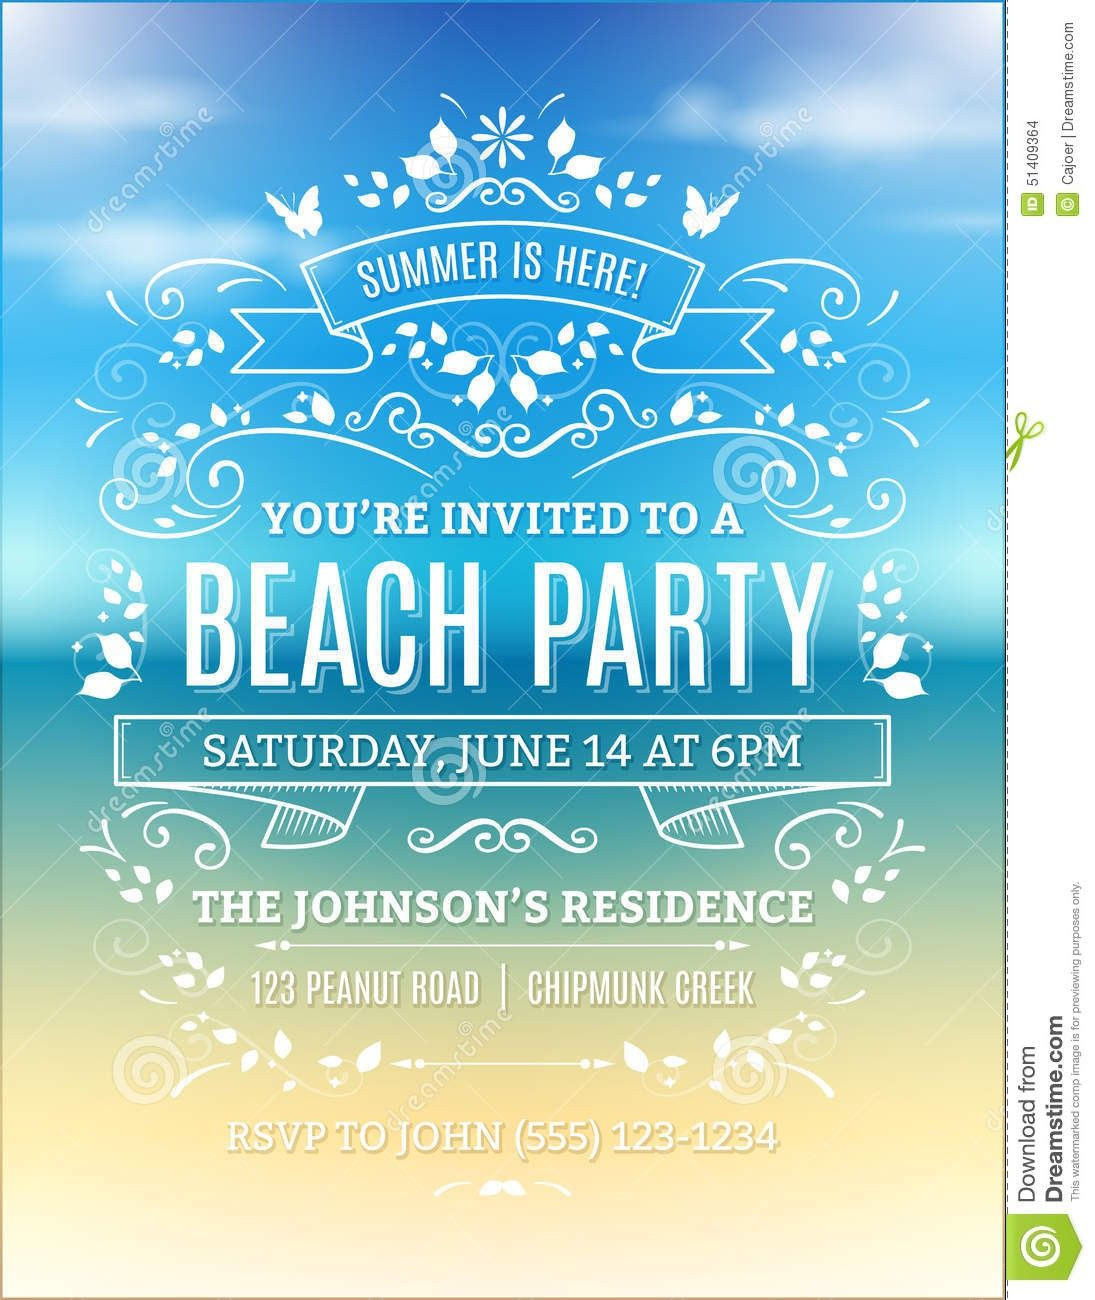 Beach Party Invitation Wording Ideas
 Free Printable Beach Party Invitations in 2019